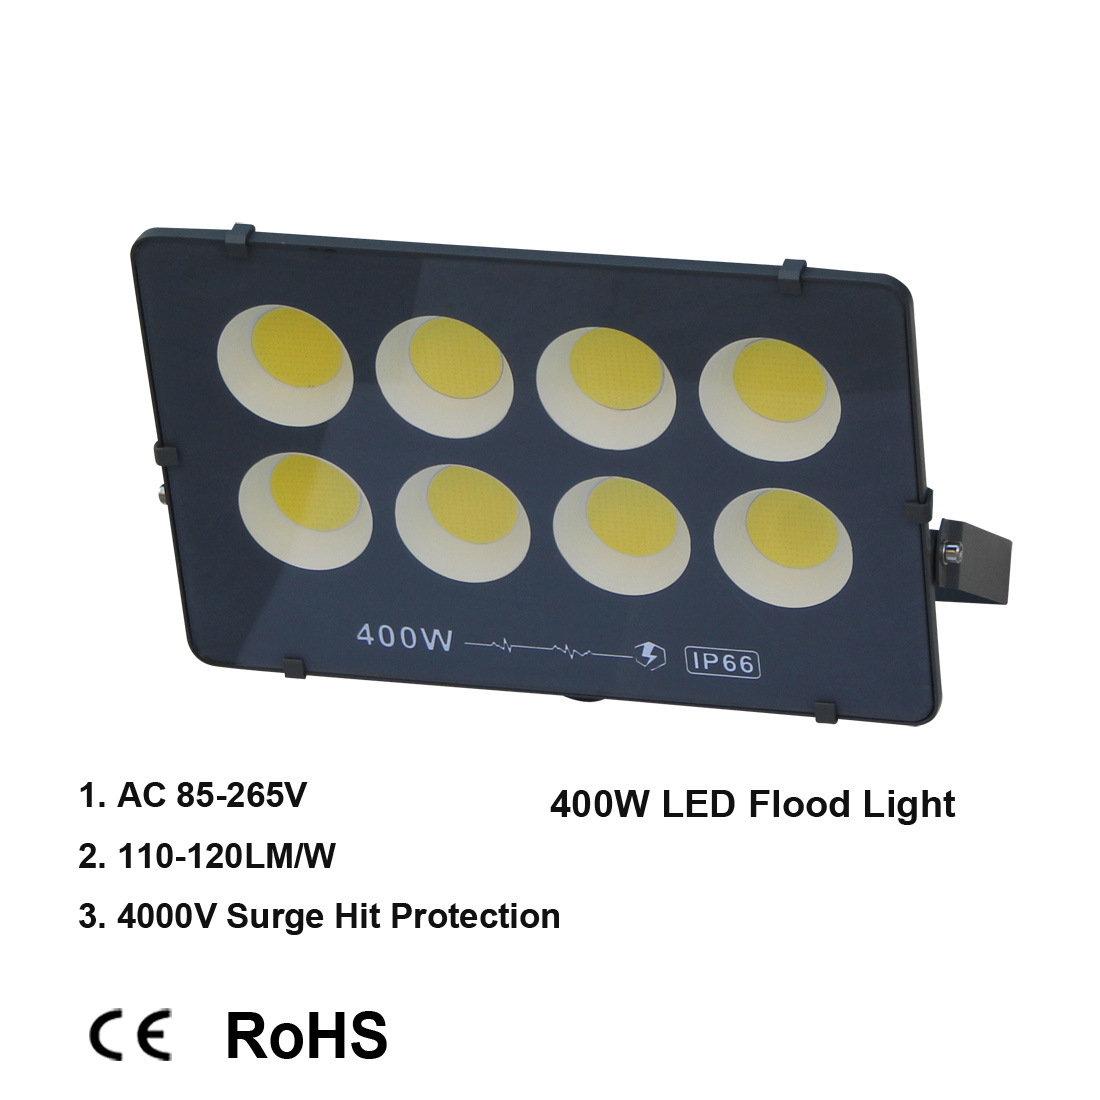 100W 200W 300W 400W 500W LED Flood Lights Waterproof IP65 Daylight White 6500k 85V-265V Outdoor Work Light for Garage Garden